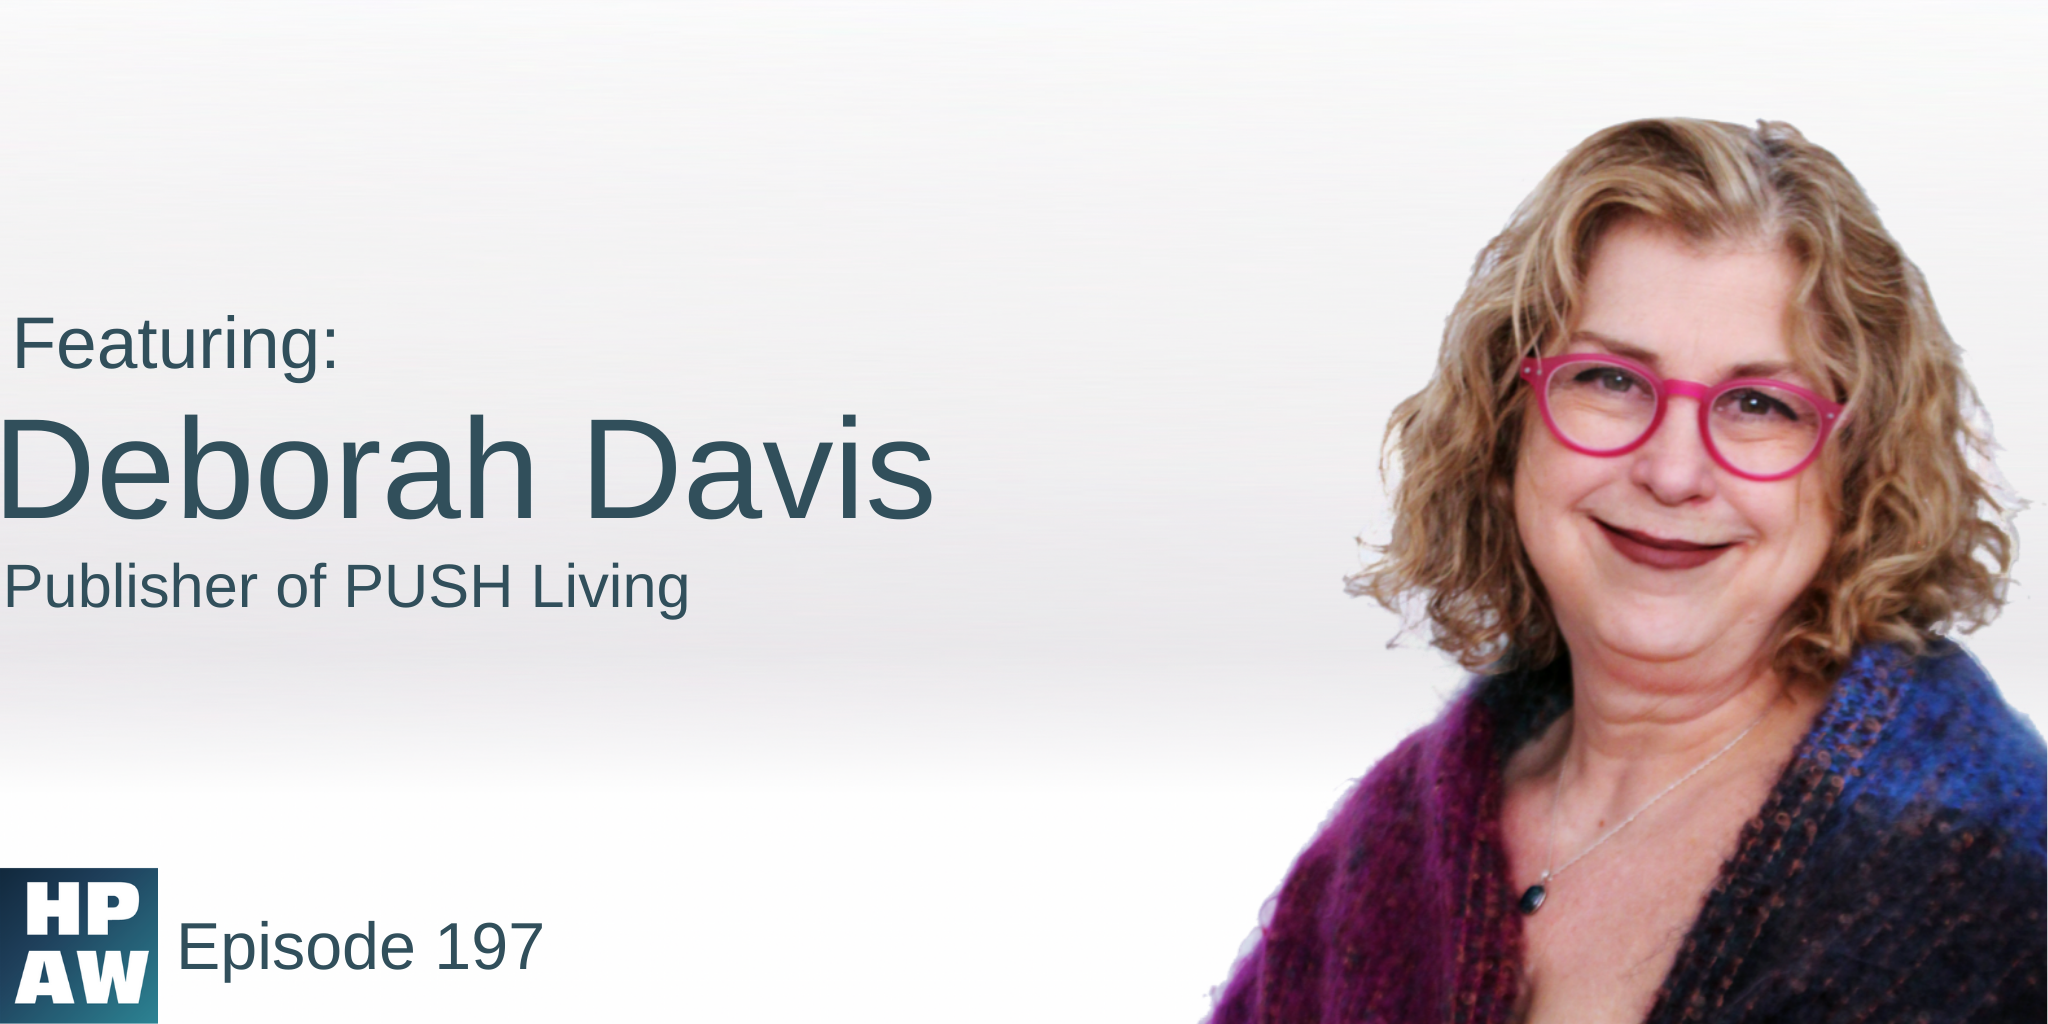 Deborah Davis Publisher of PUSH Living